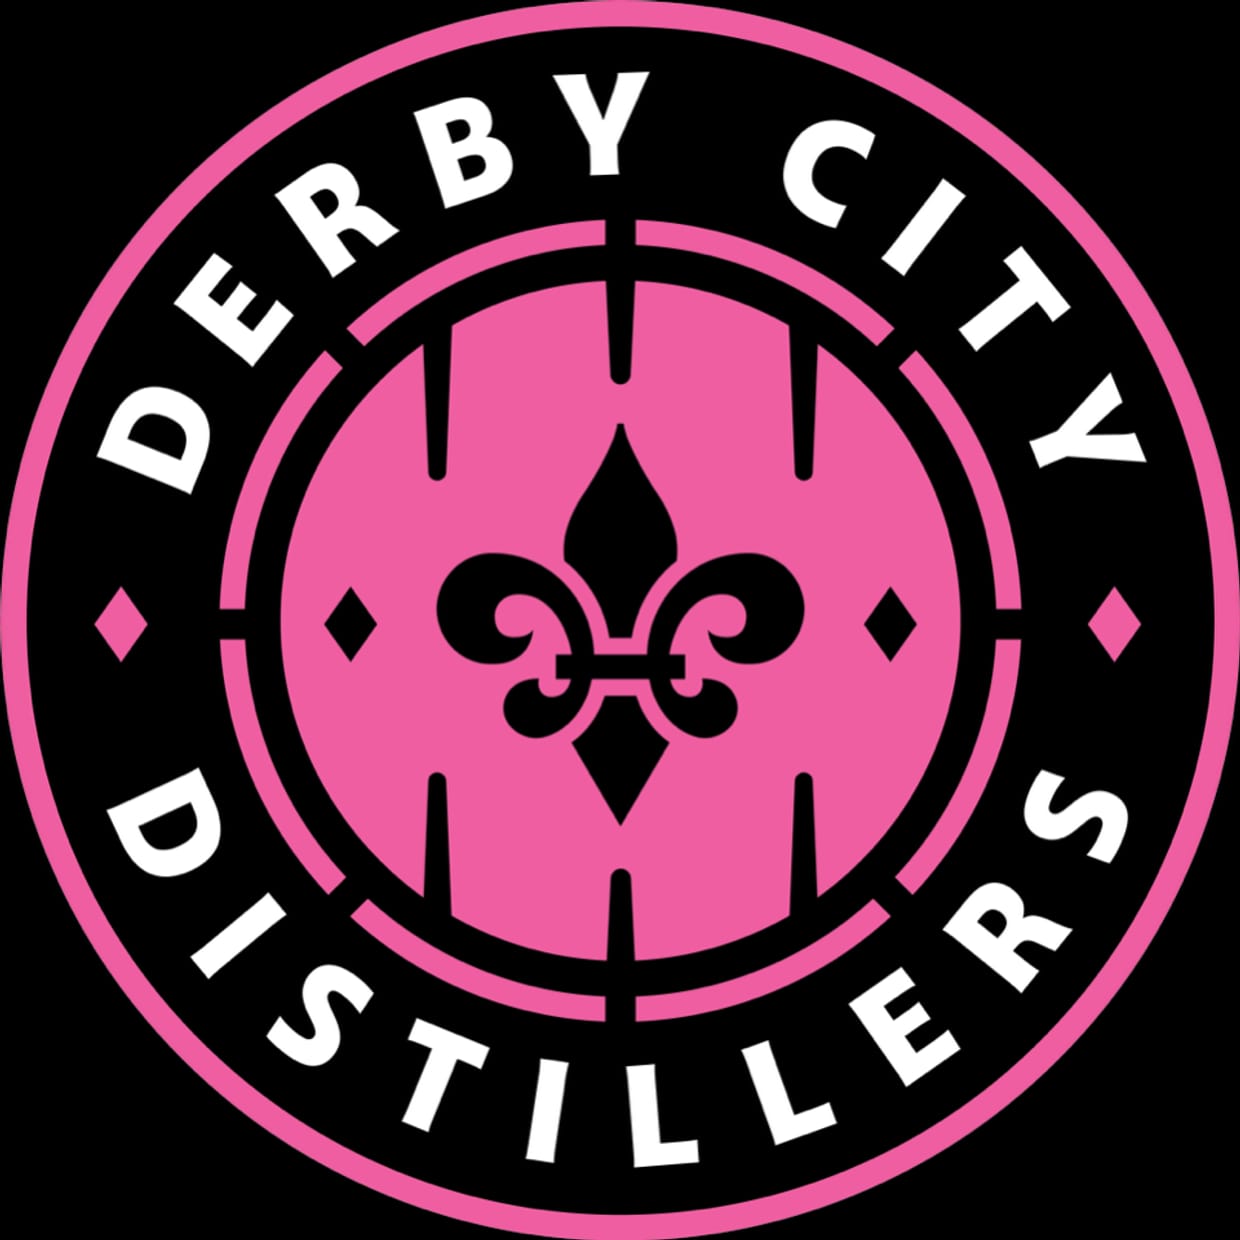 Derby City Distillers v. Owensboro Thoroughbreds